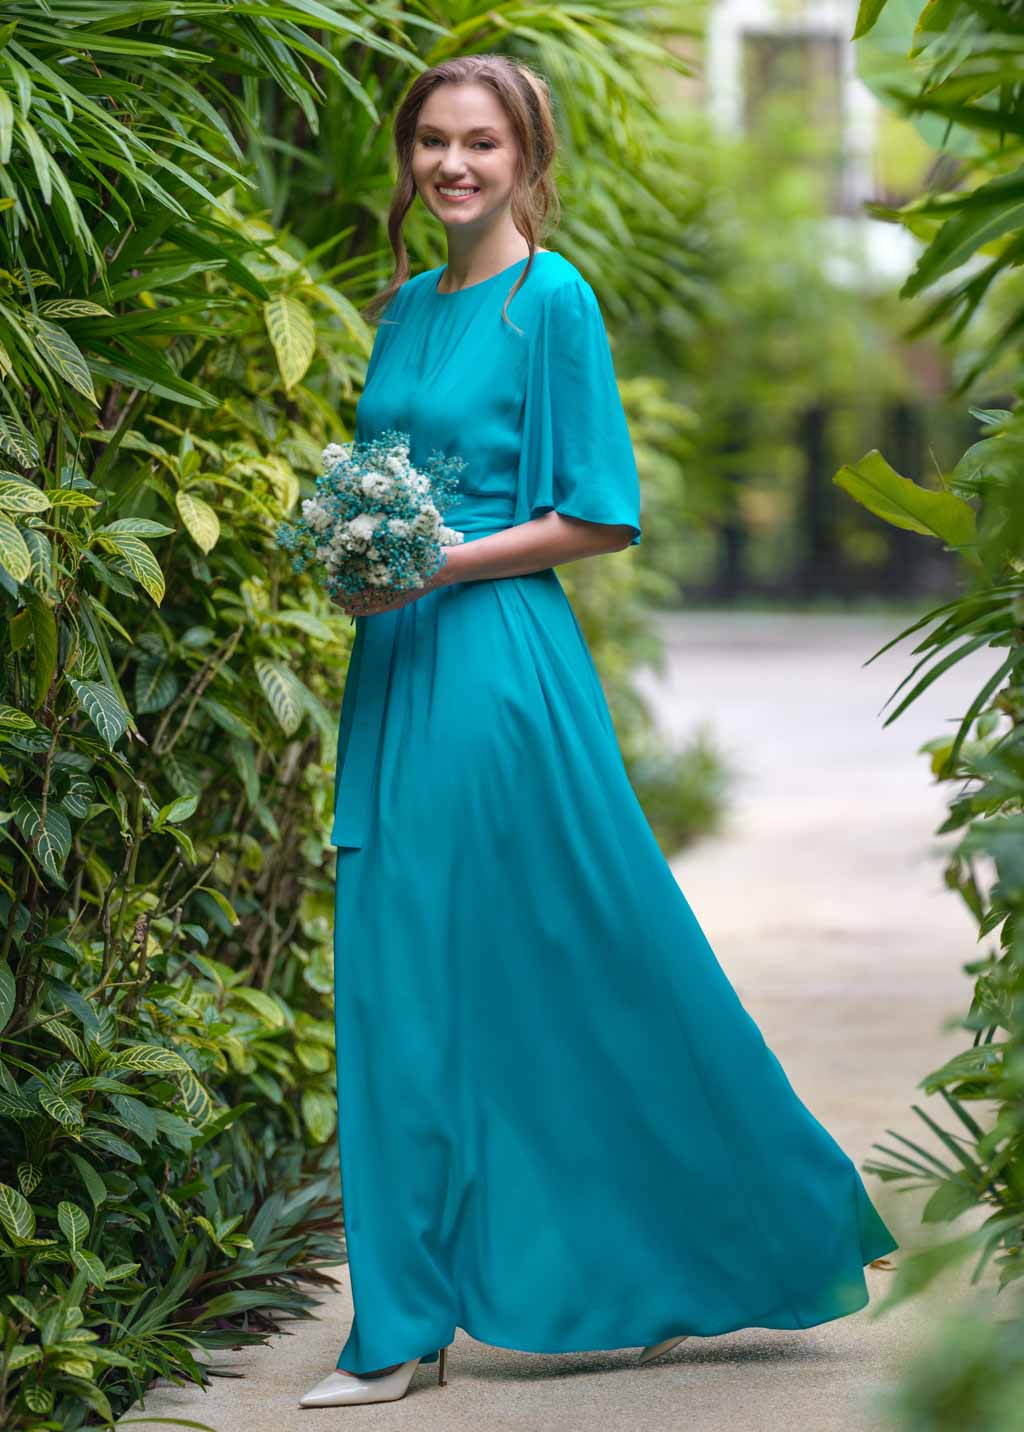 Turquoise slit dress with belt